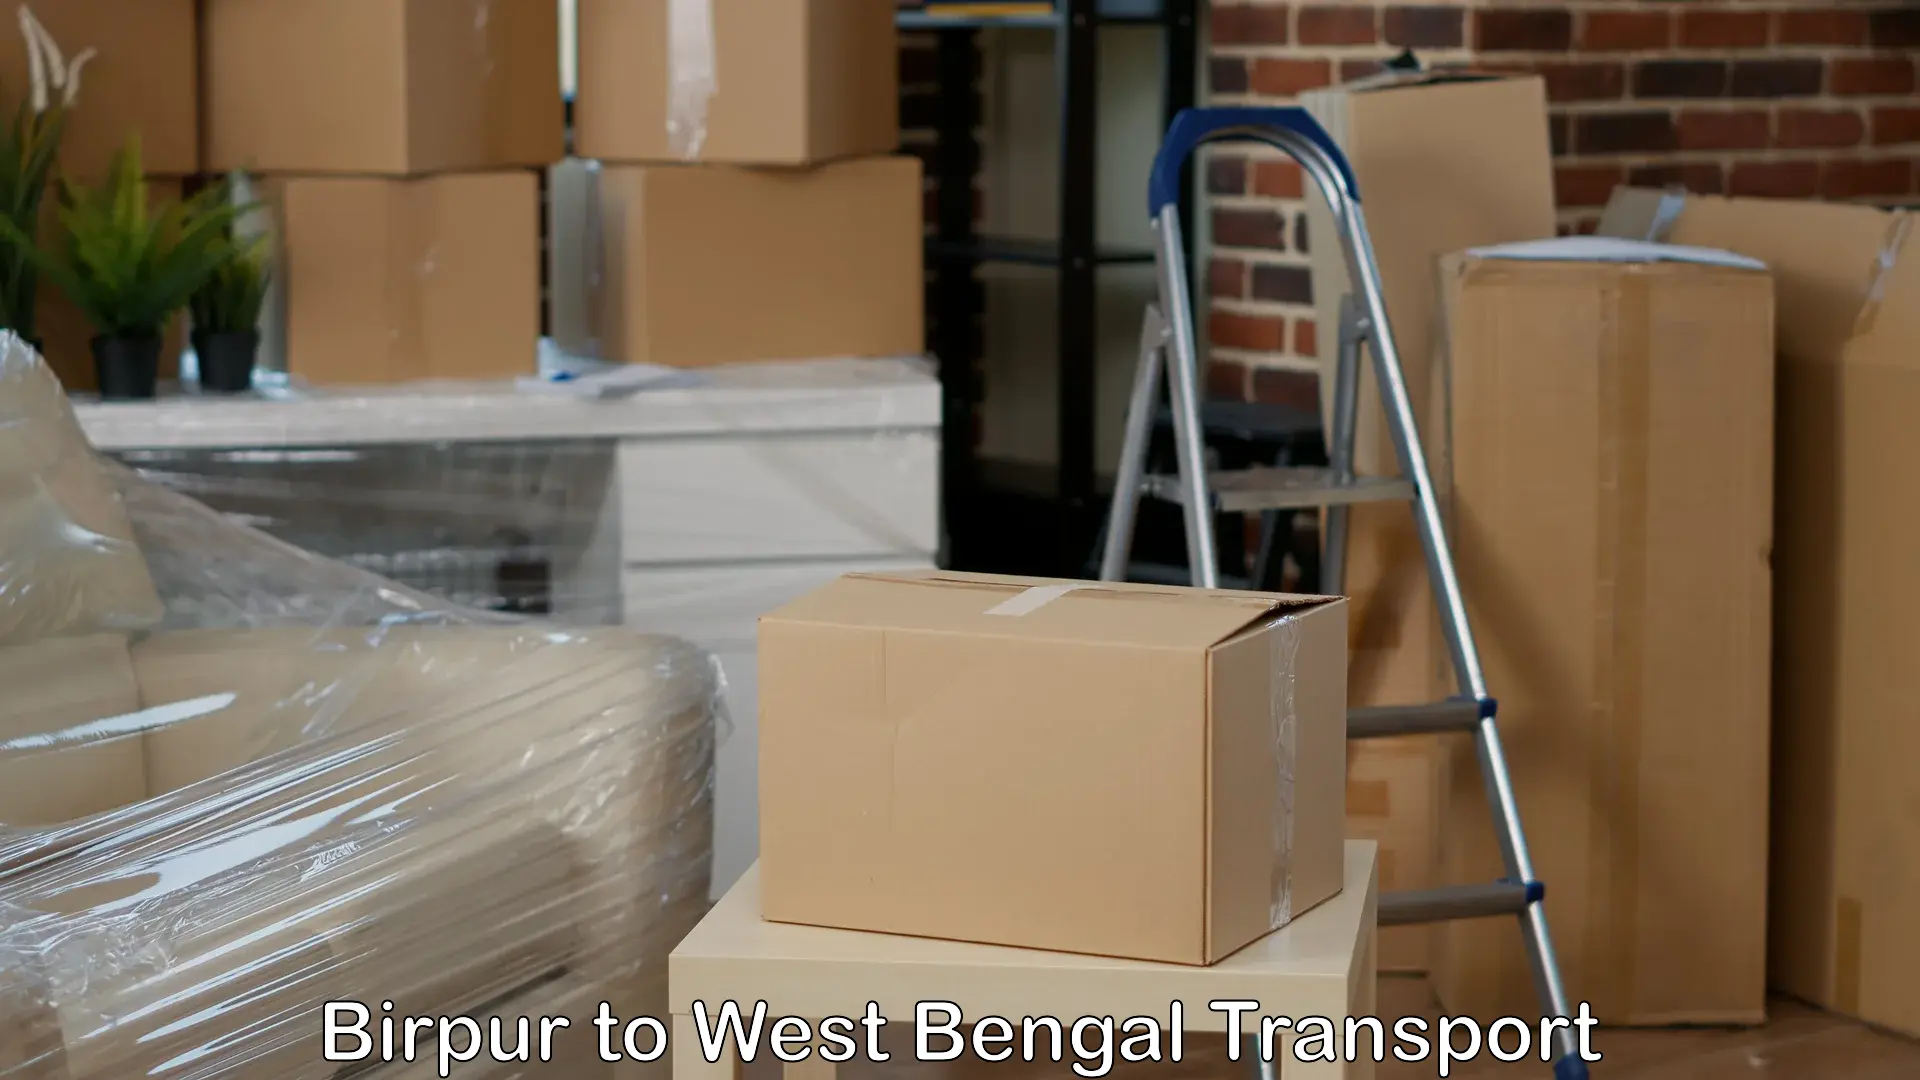 Truck transport companies in India Birpur to Bandel